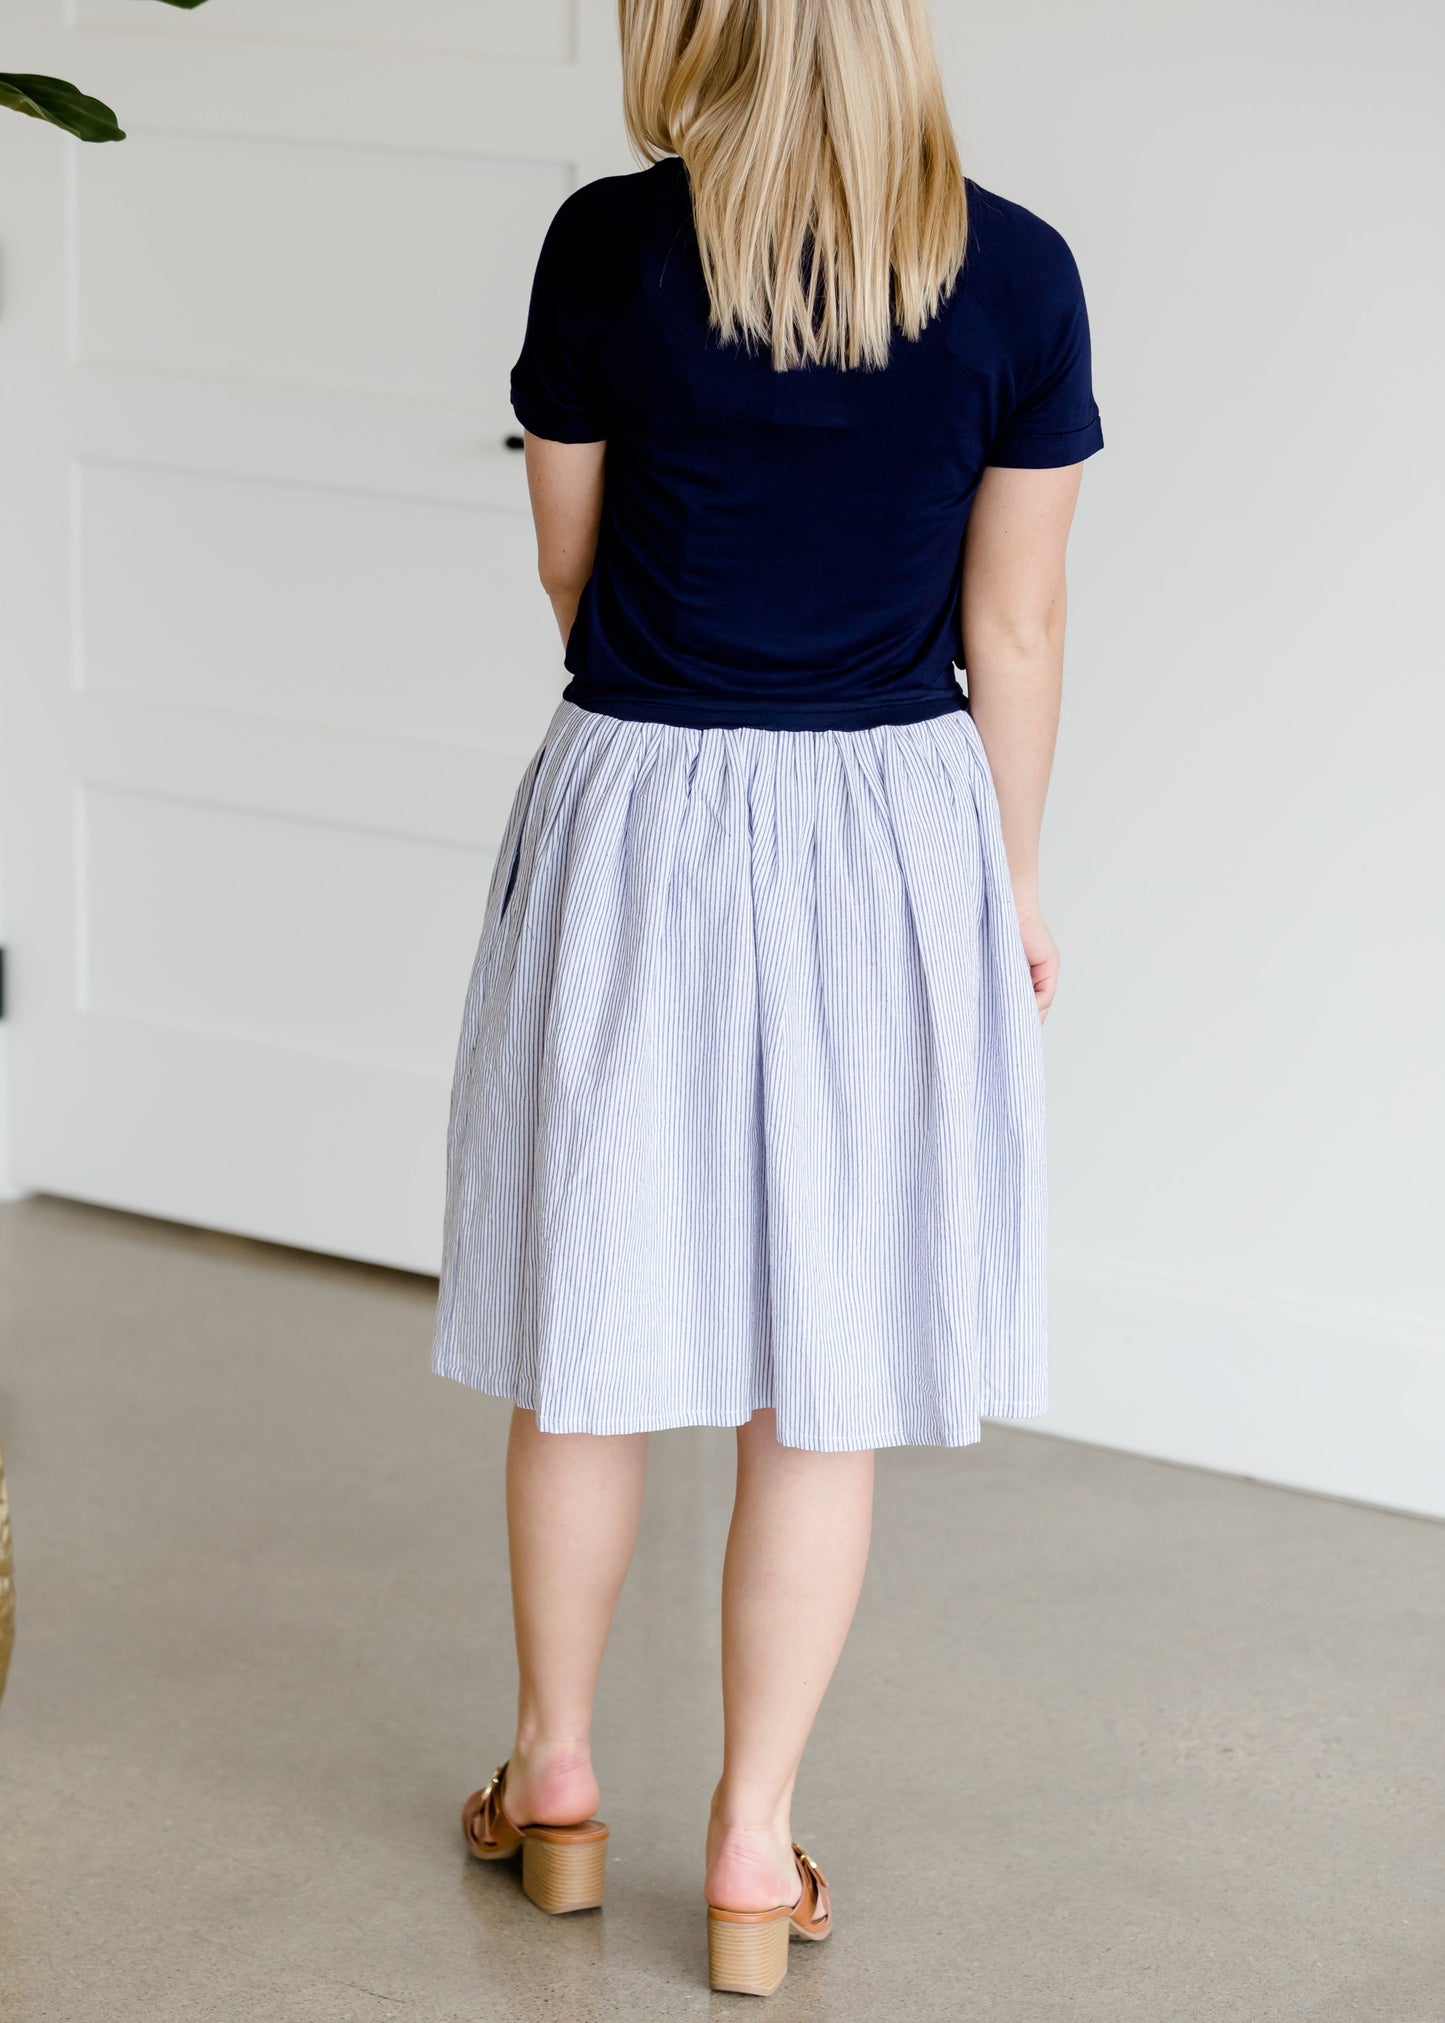 Blue and White Striped Midi Skirt - FINAL SALE Skirts